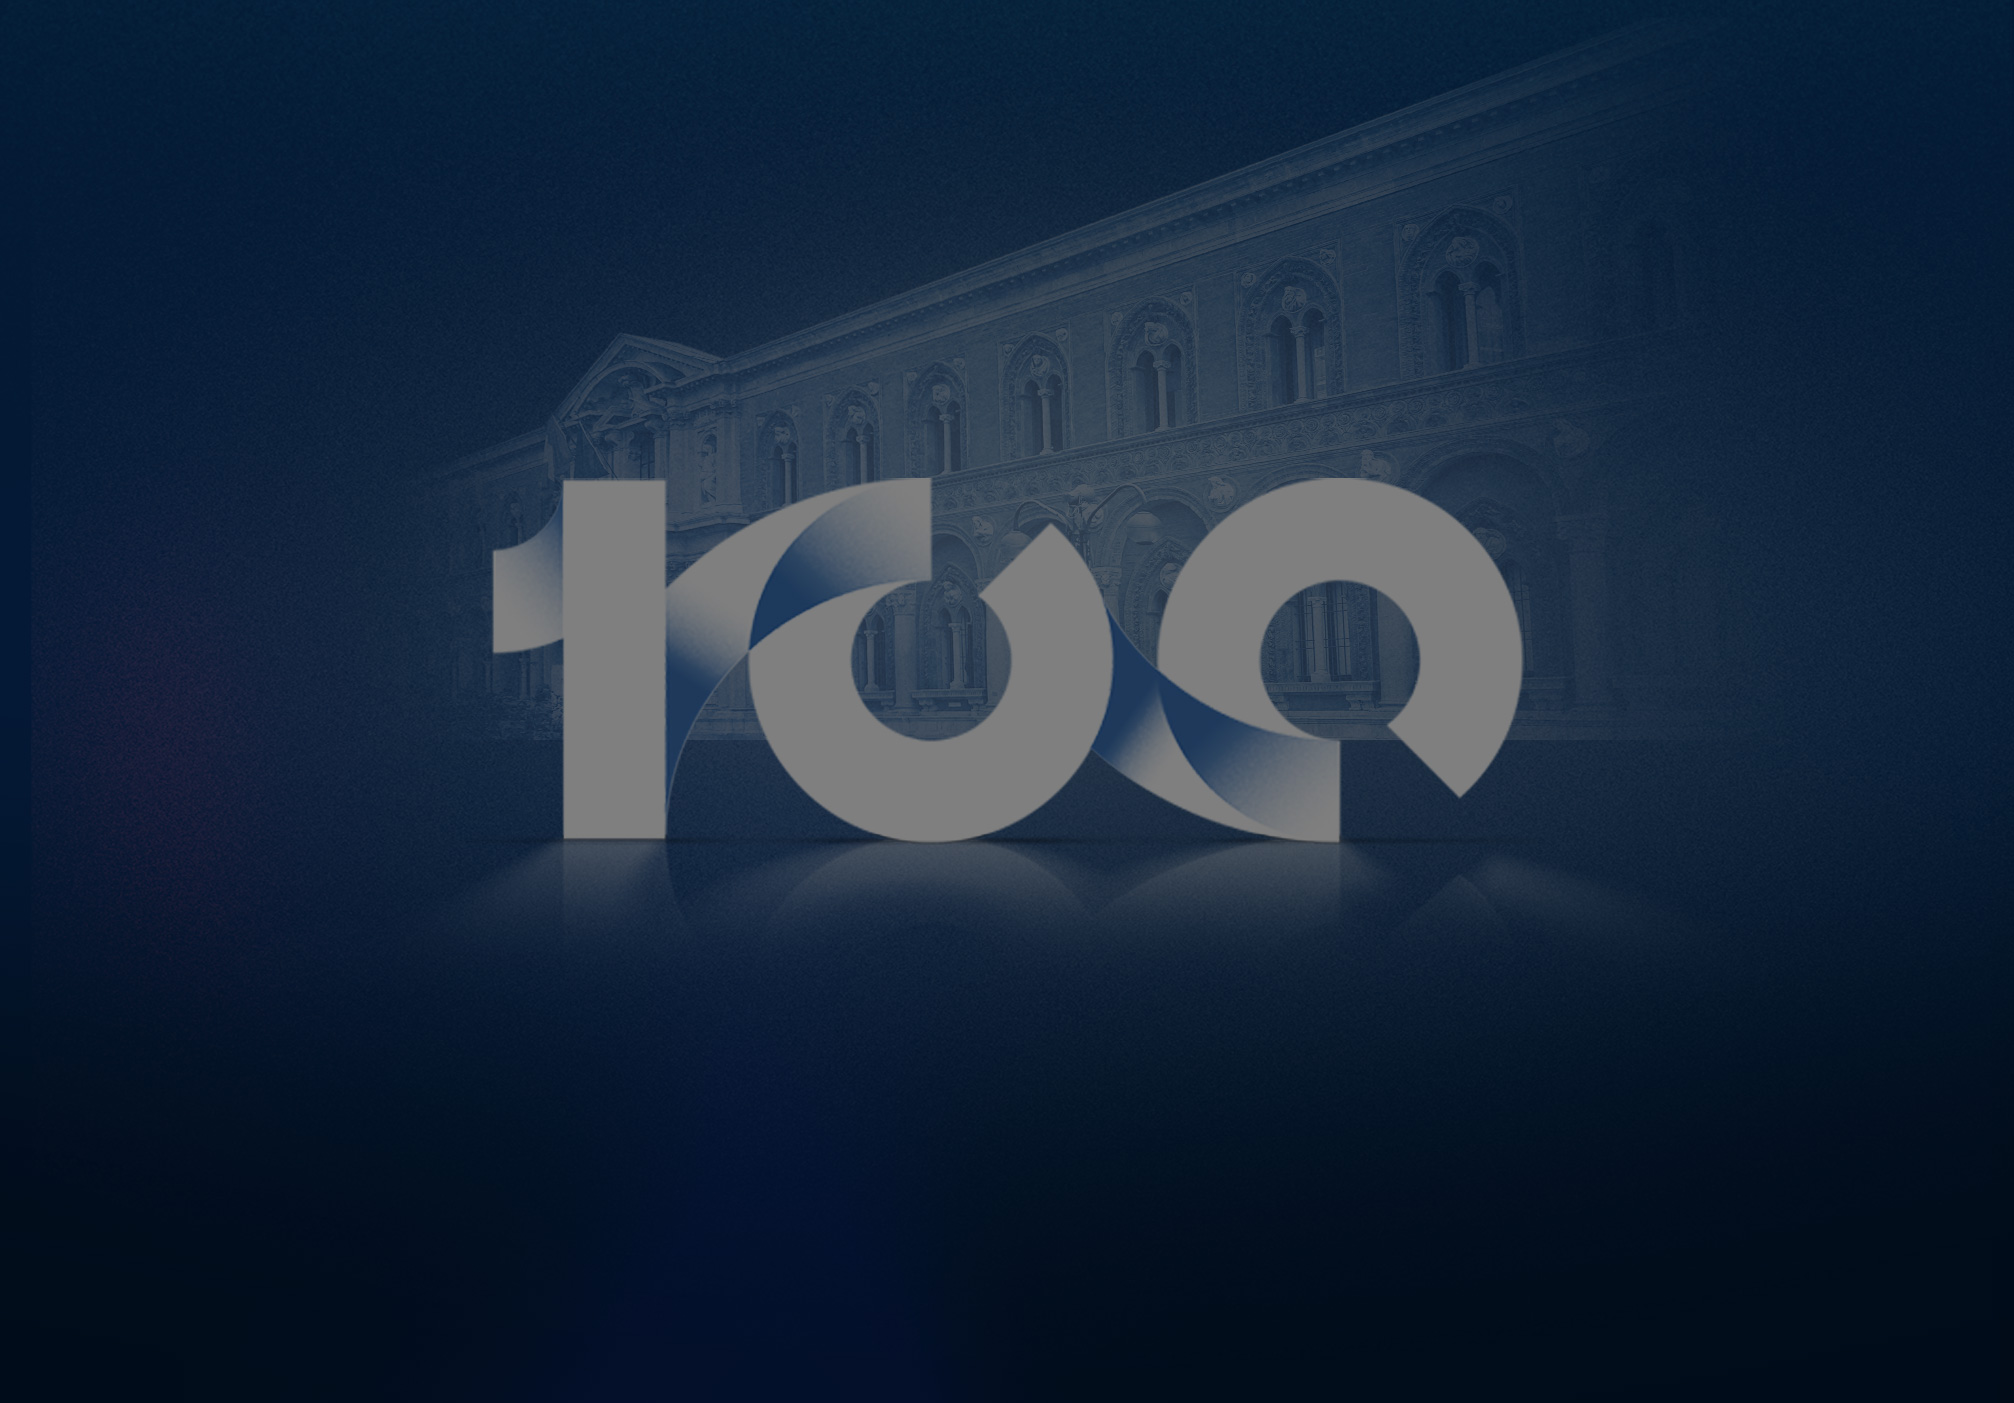 100th Anniversary logo